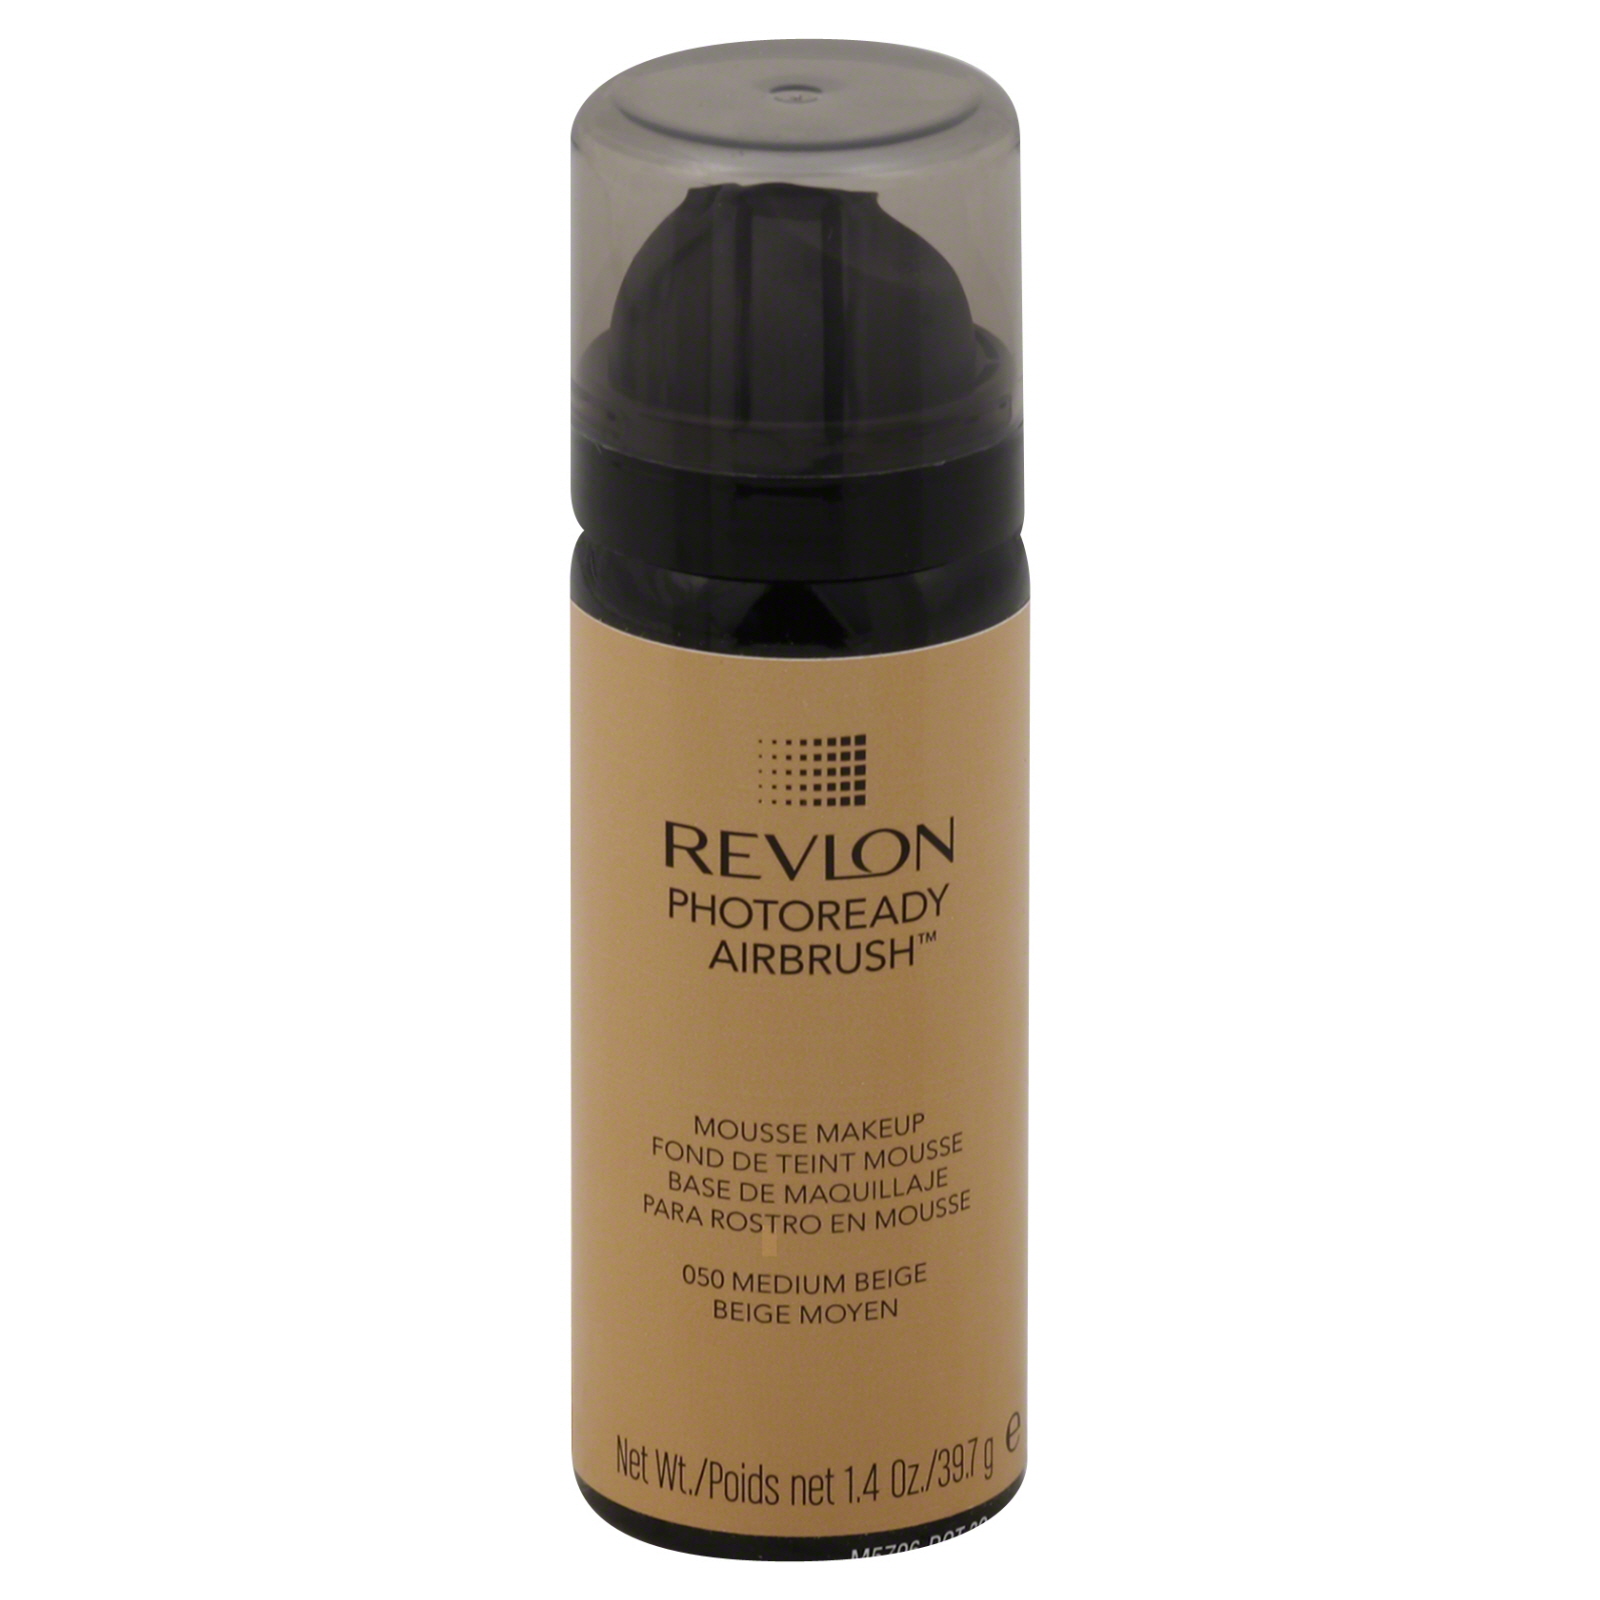 Revlon Photoready Airbrush Mousse Makeup Medium Beige 1.4 fl oz